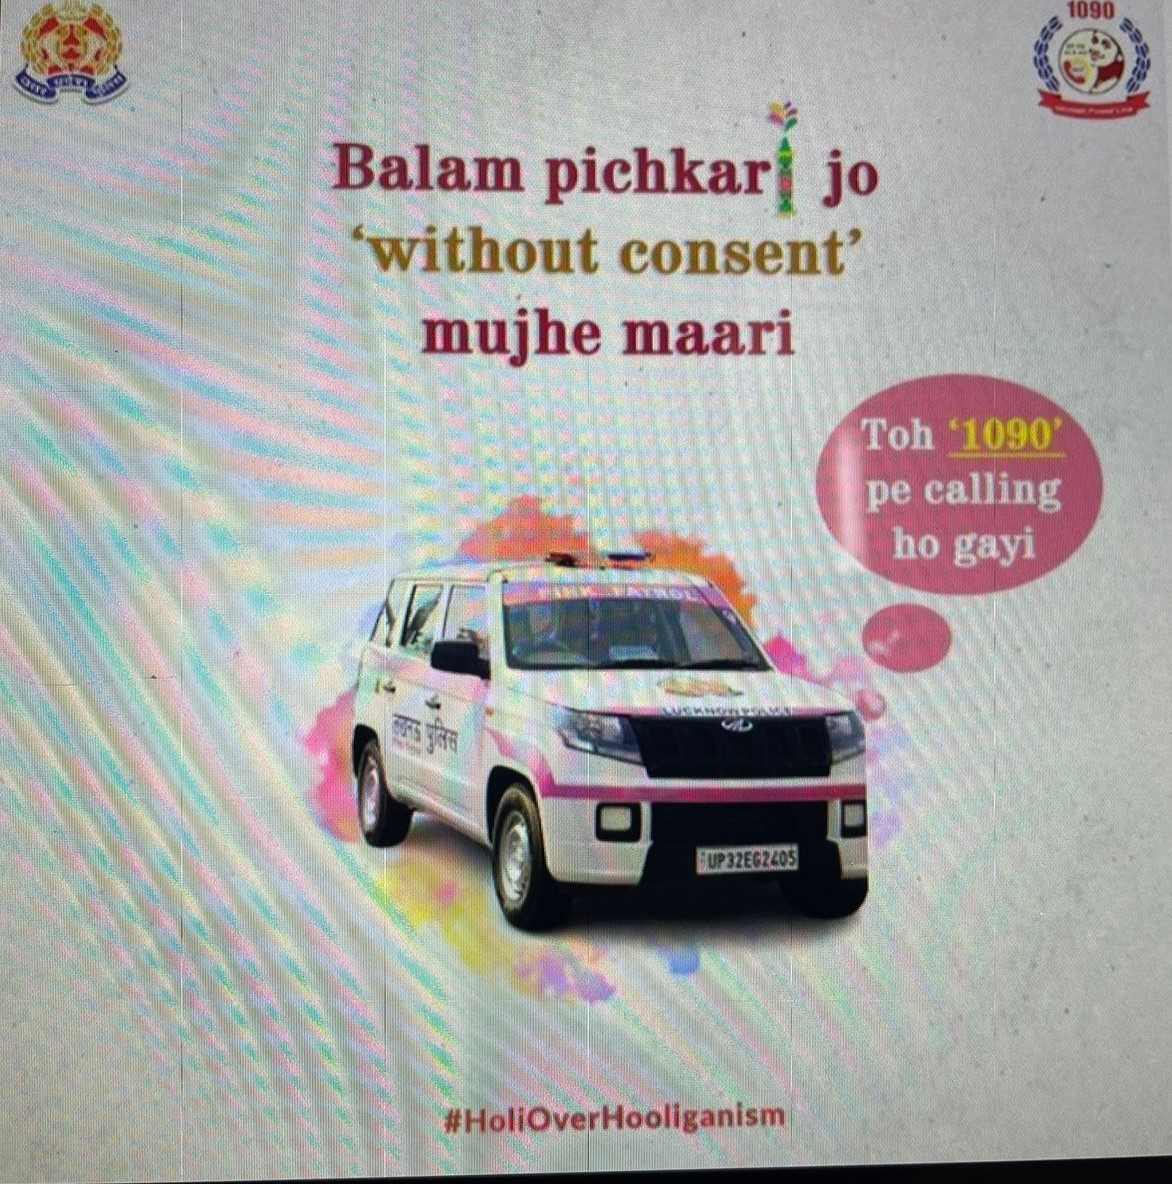 Holi With Consent: Mumbai And UP Police's Holi Messages Win Internet -  odishabytes